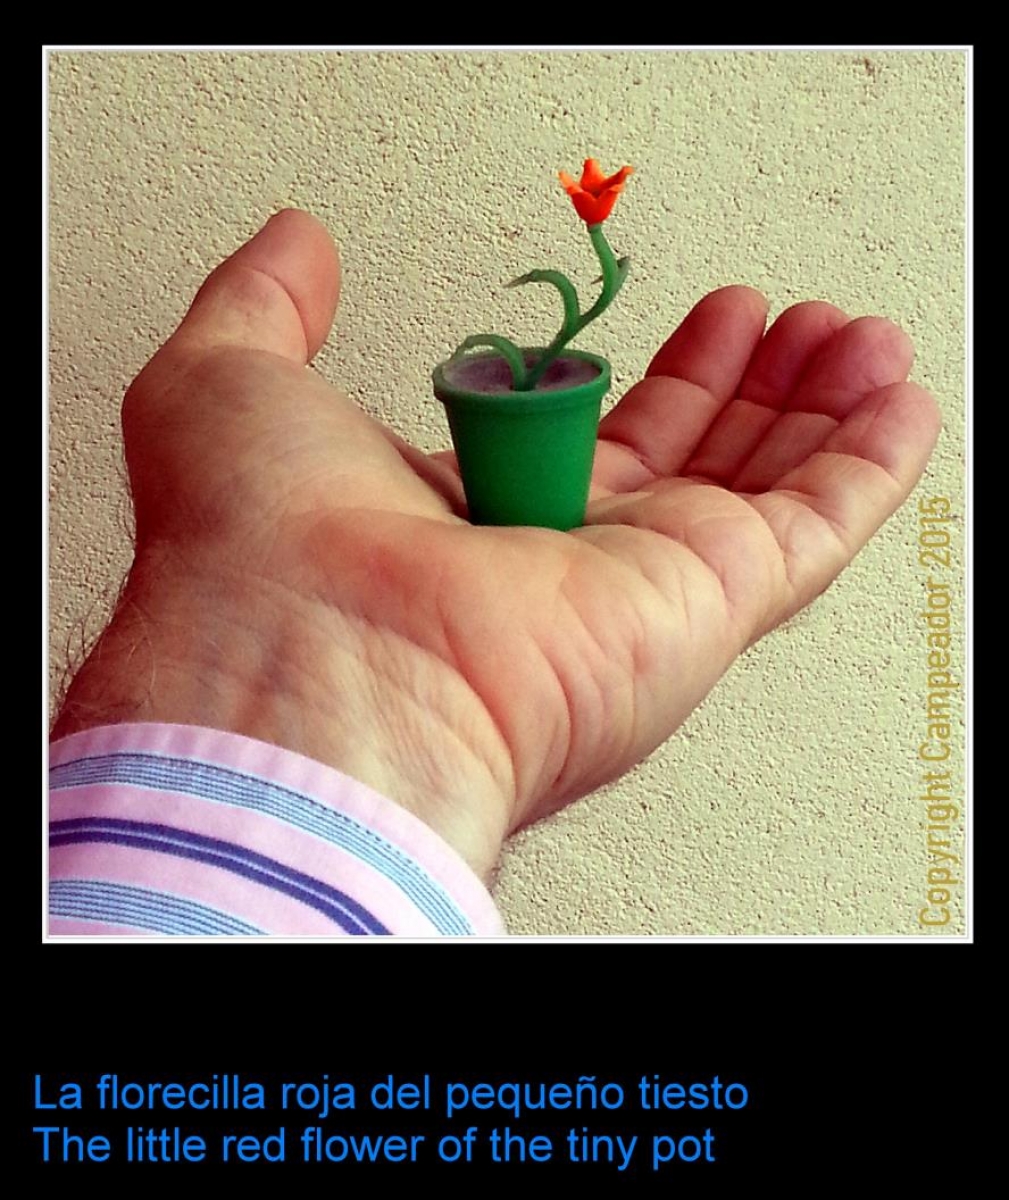 La florecilla roja del pequeo tiesto -- The little red flower of the tiny pot. Photo by Campeador. 